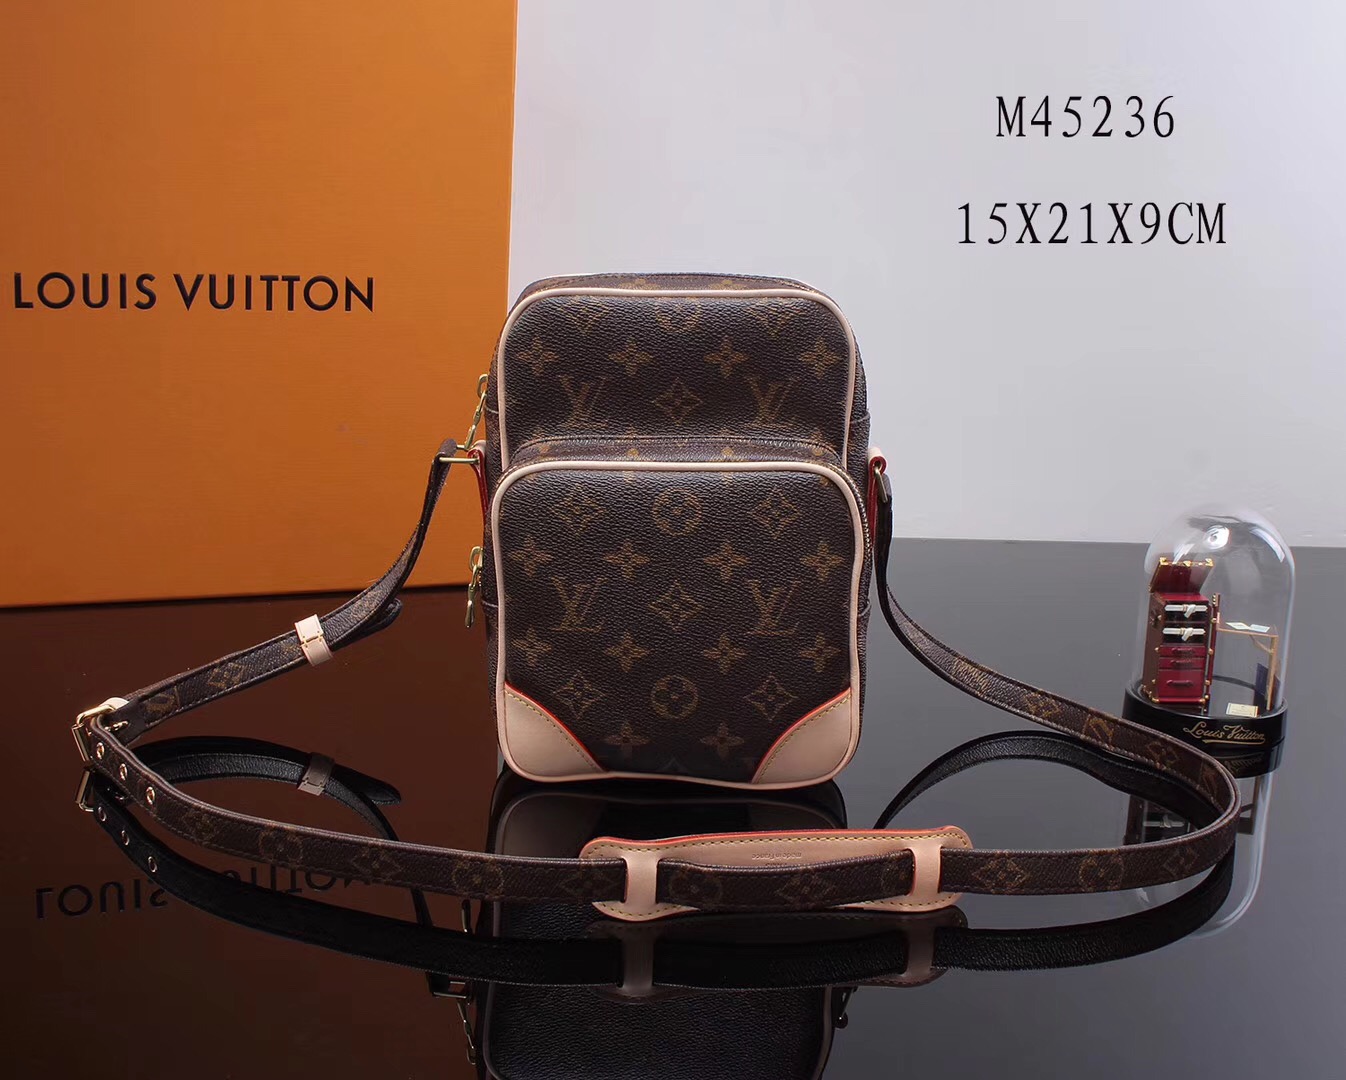 LV Louis Vuitton M45236 Small Shoulder bags Monogram Handbags